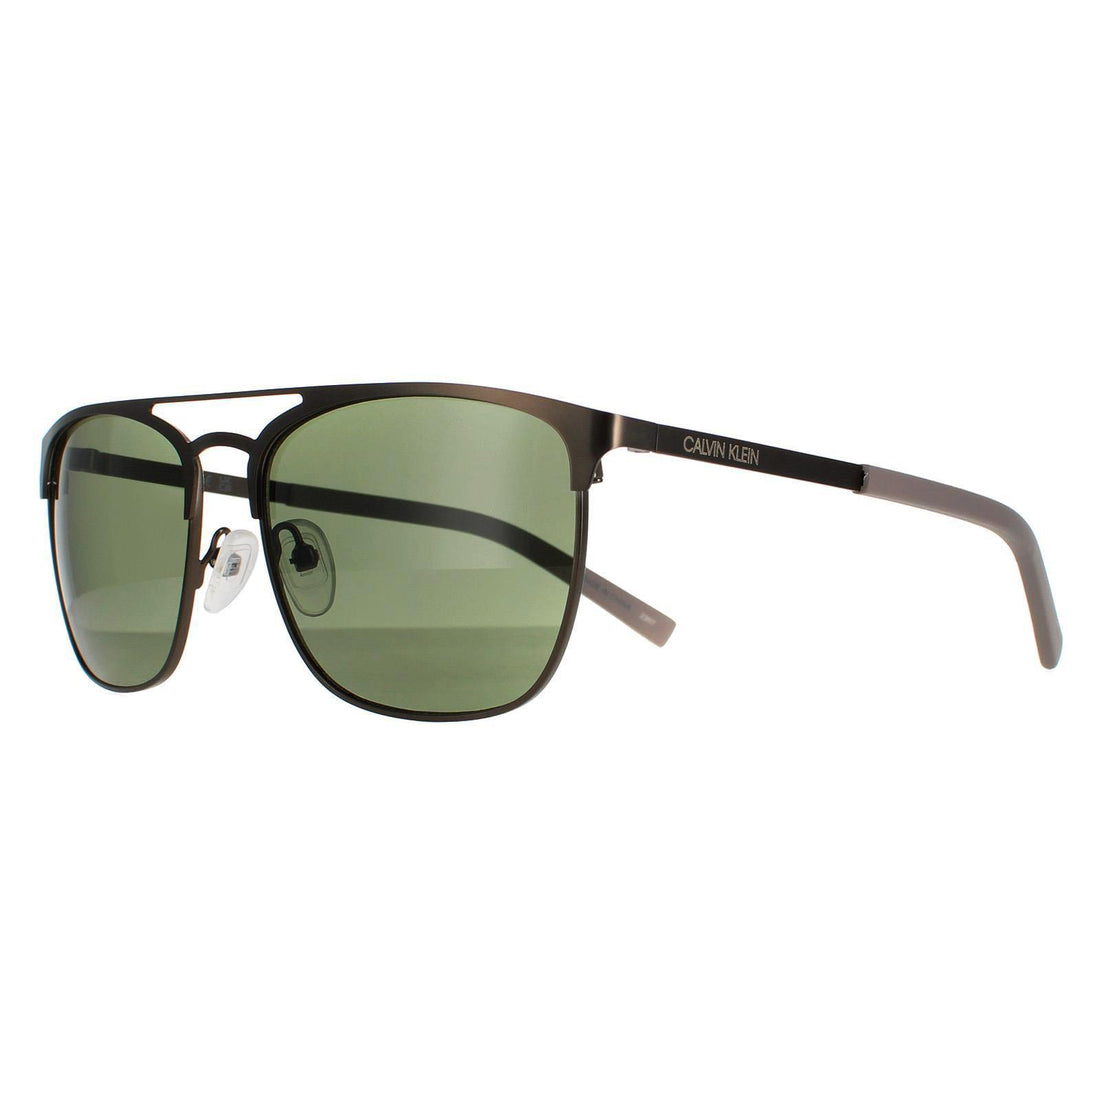 Calvin Klein Sunglasses CK20123S 008 Matte Gunmetal Solid Green G15